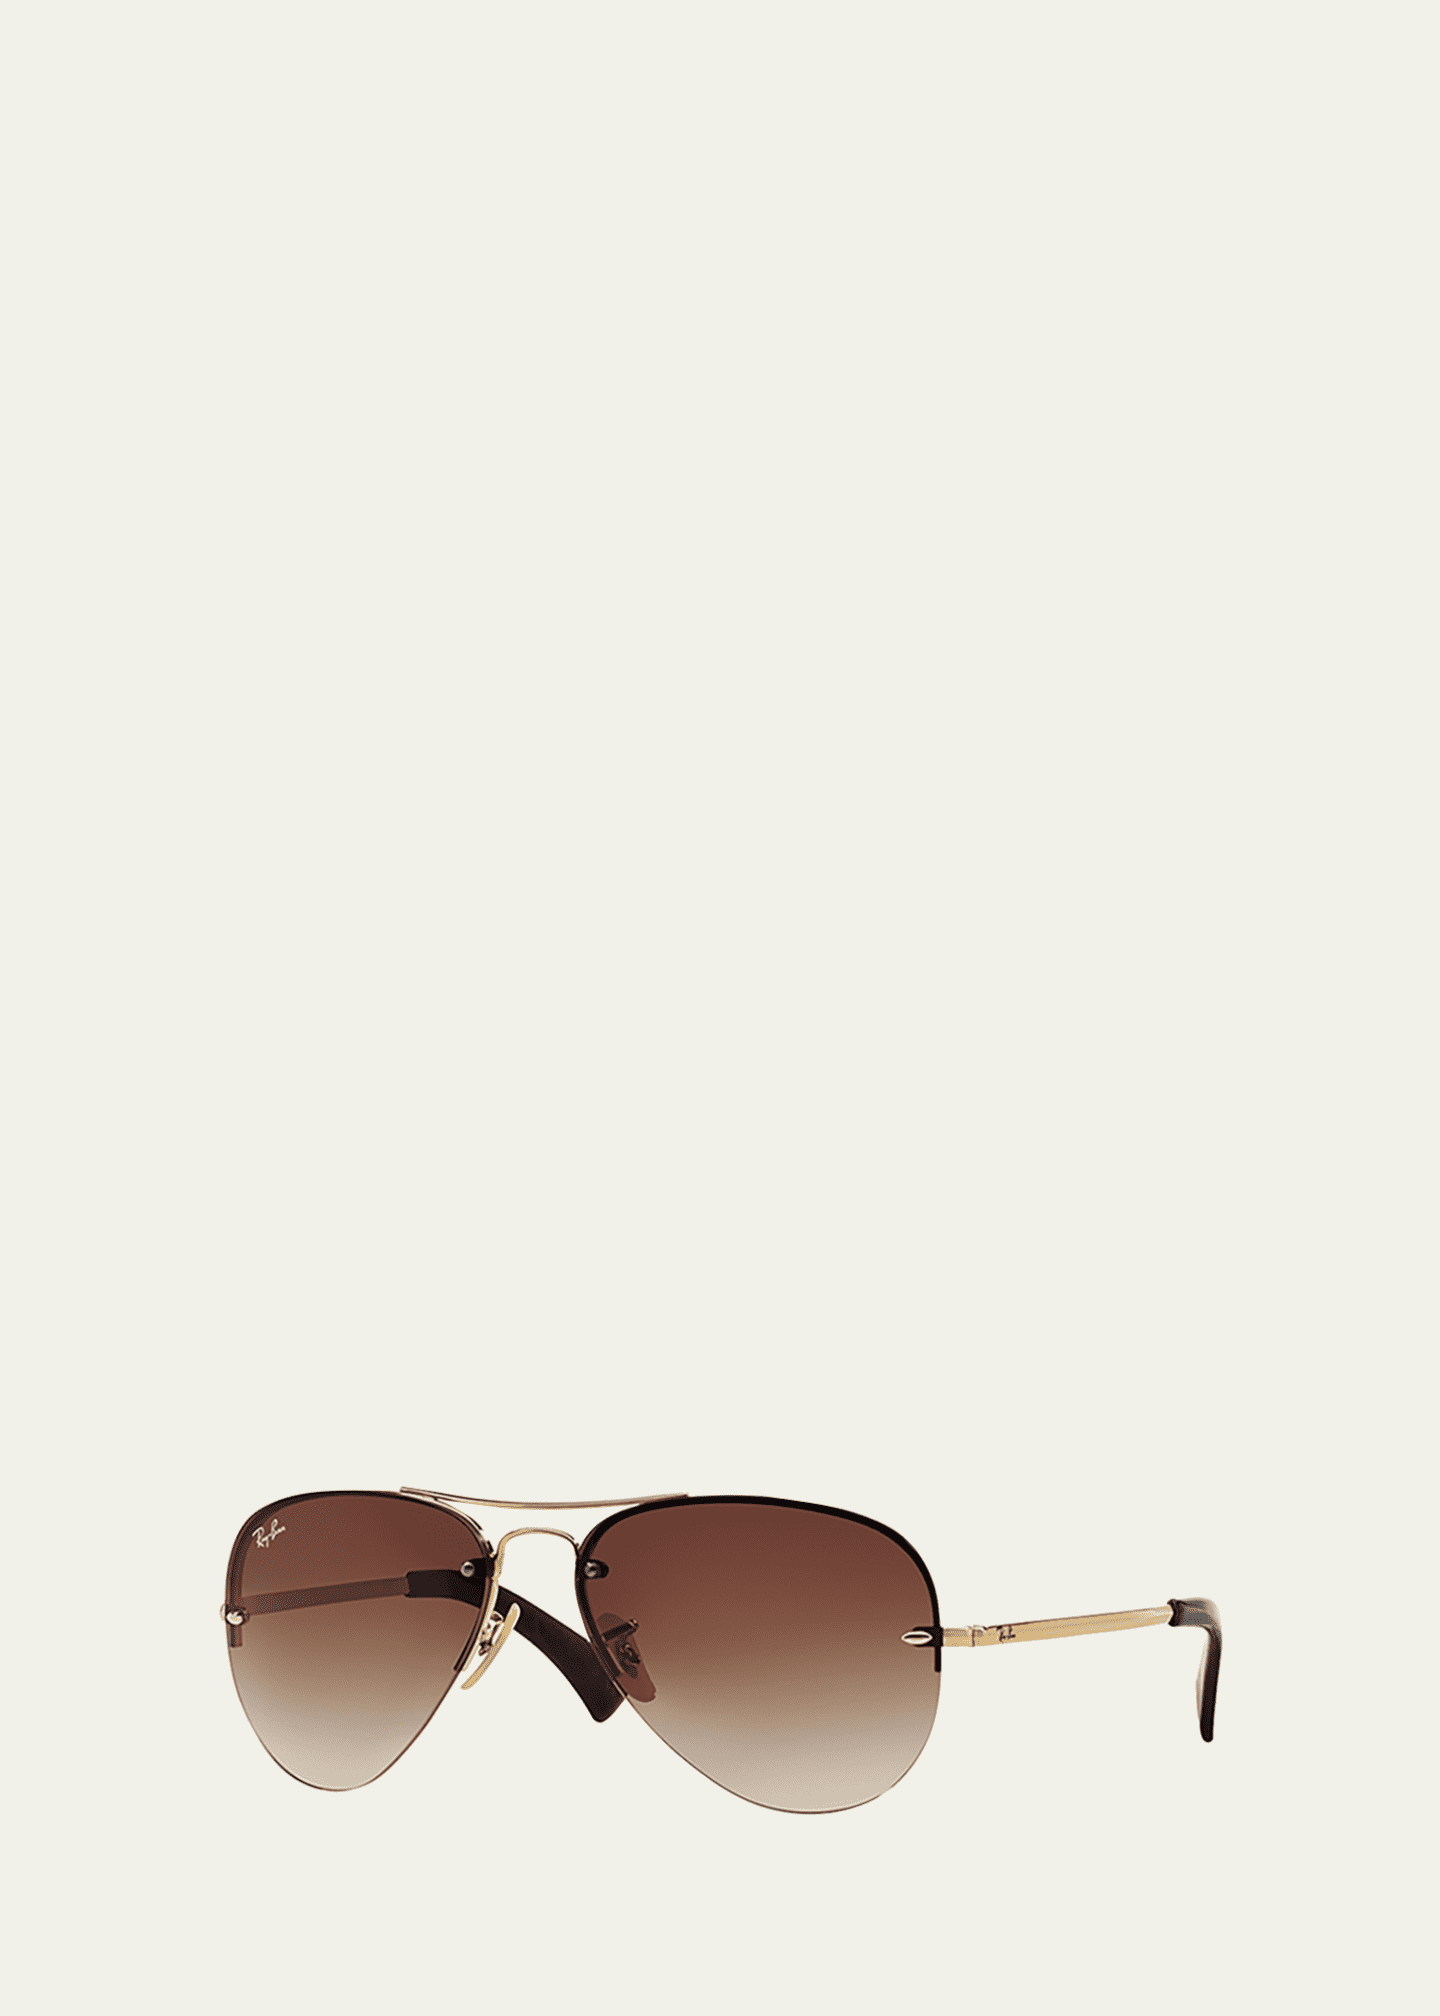 Ray-Ban Original Aviator Sunglasses, Golden